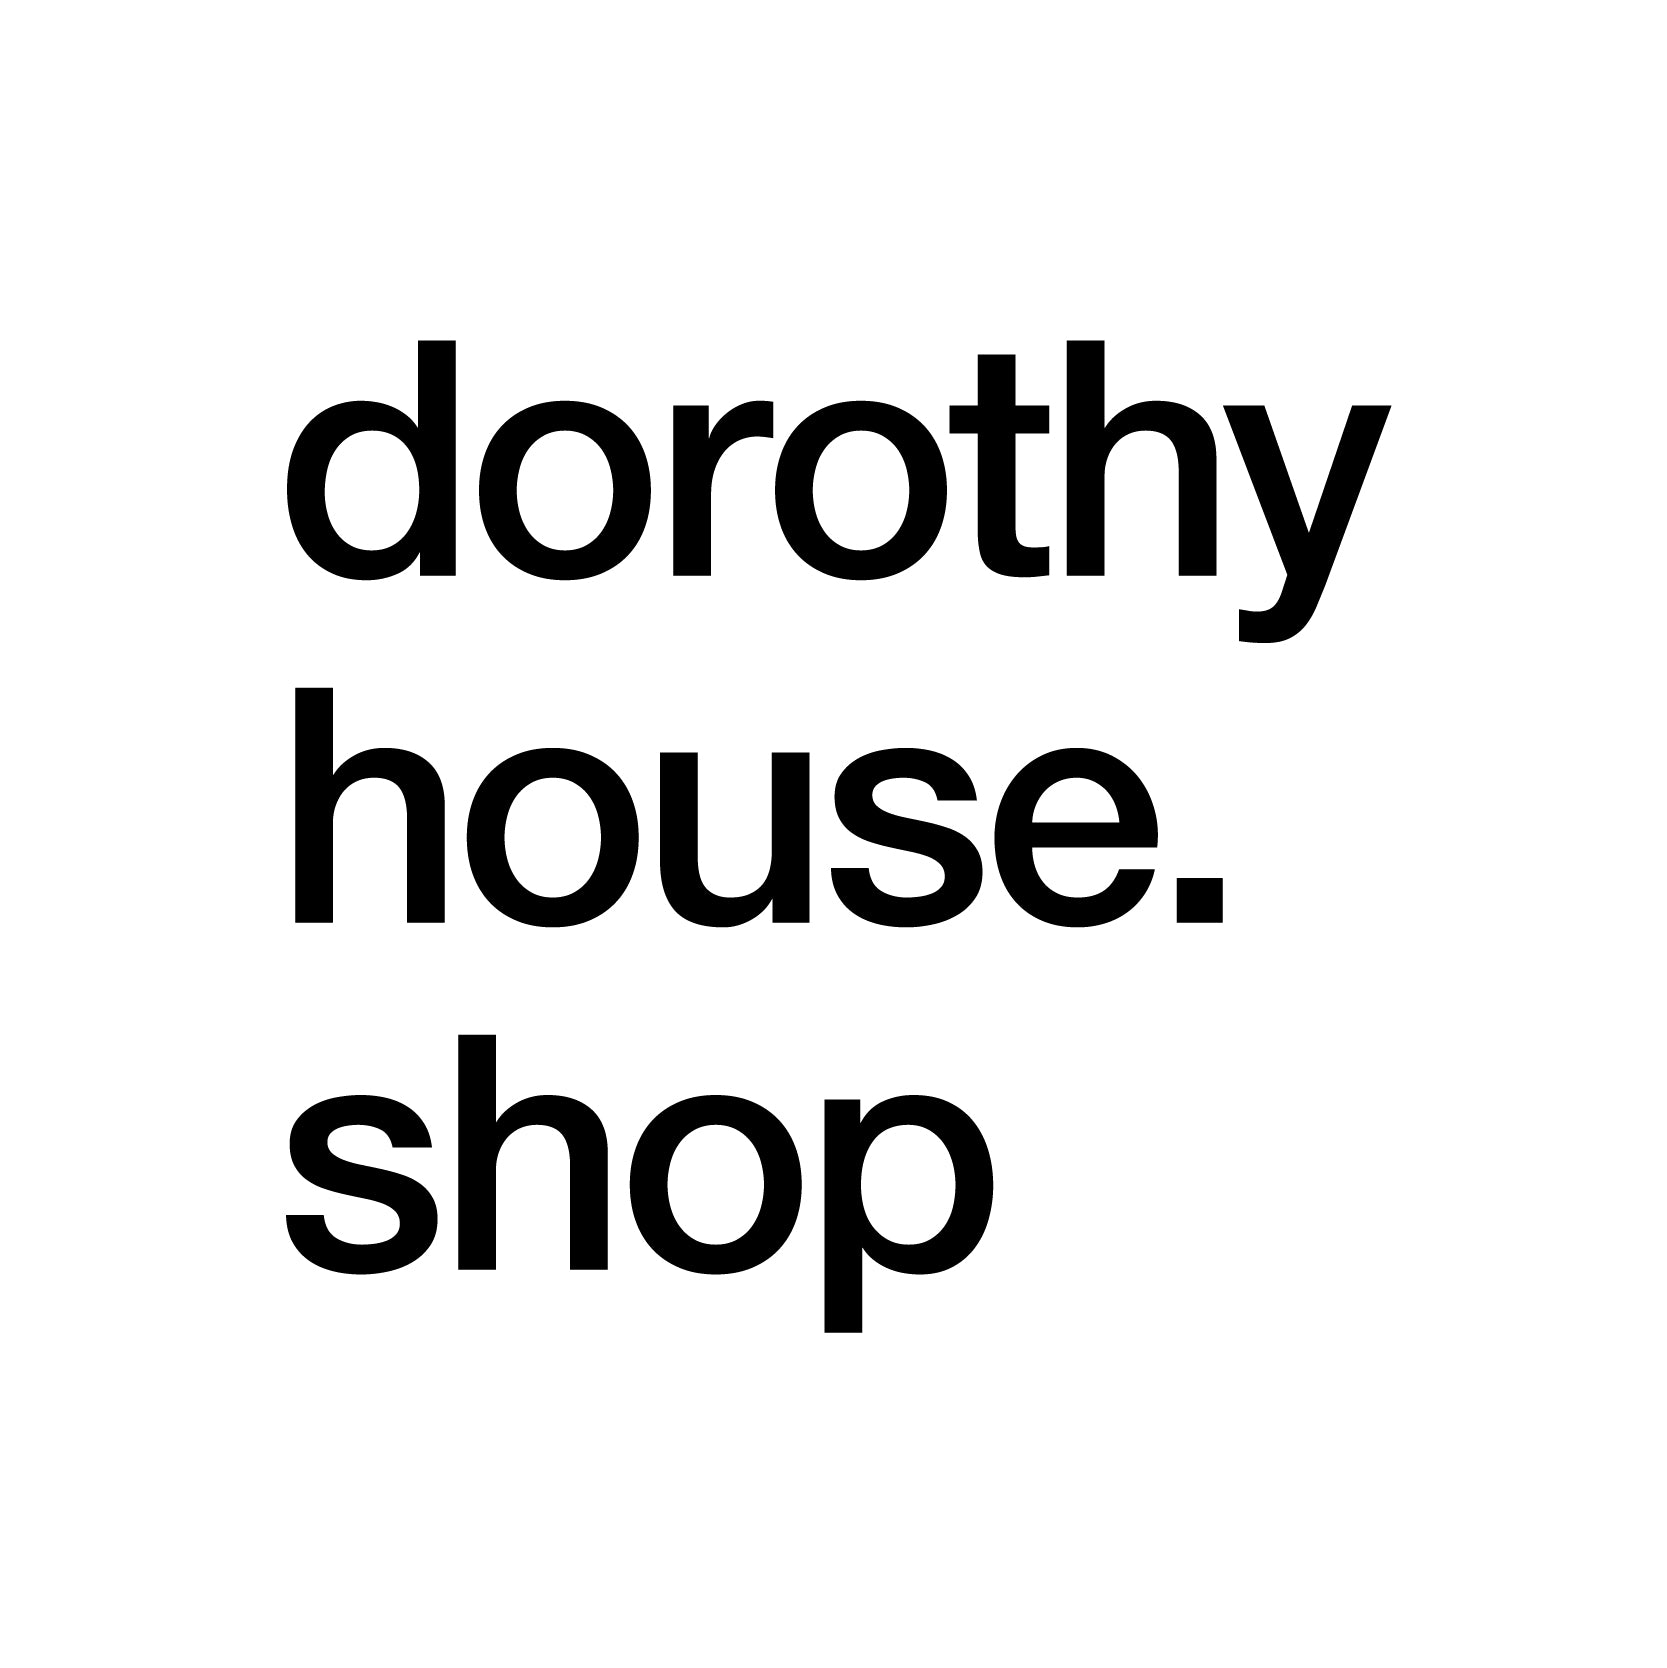 dorothyhouse.shop